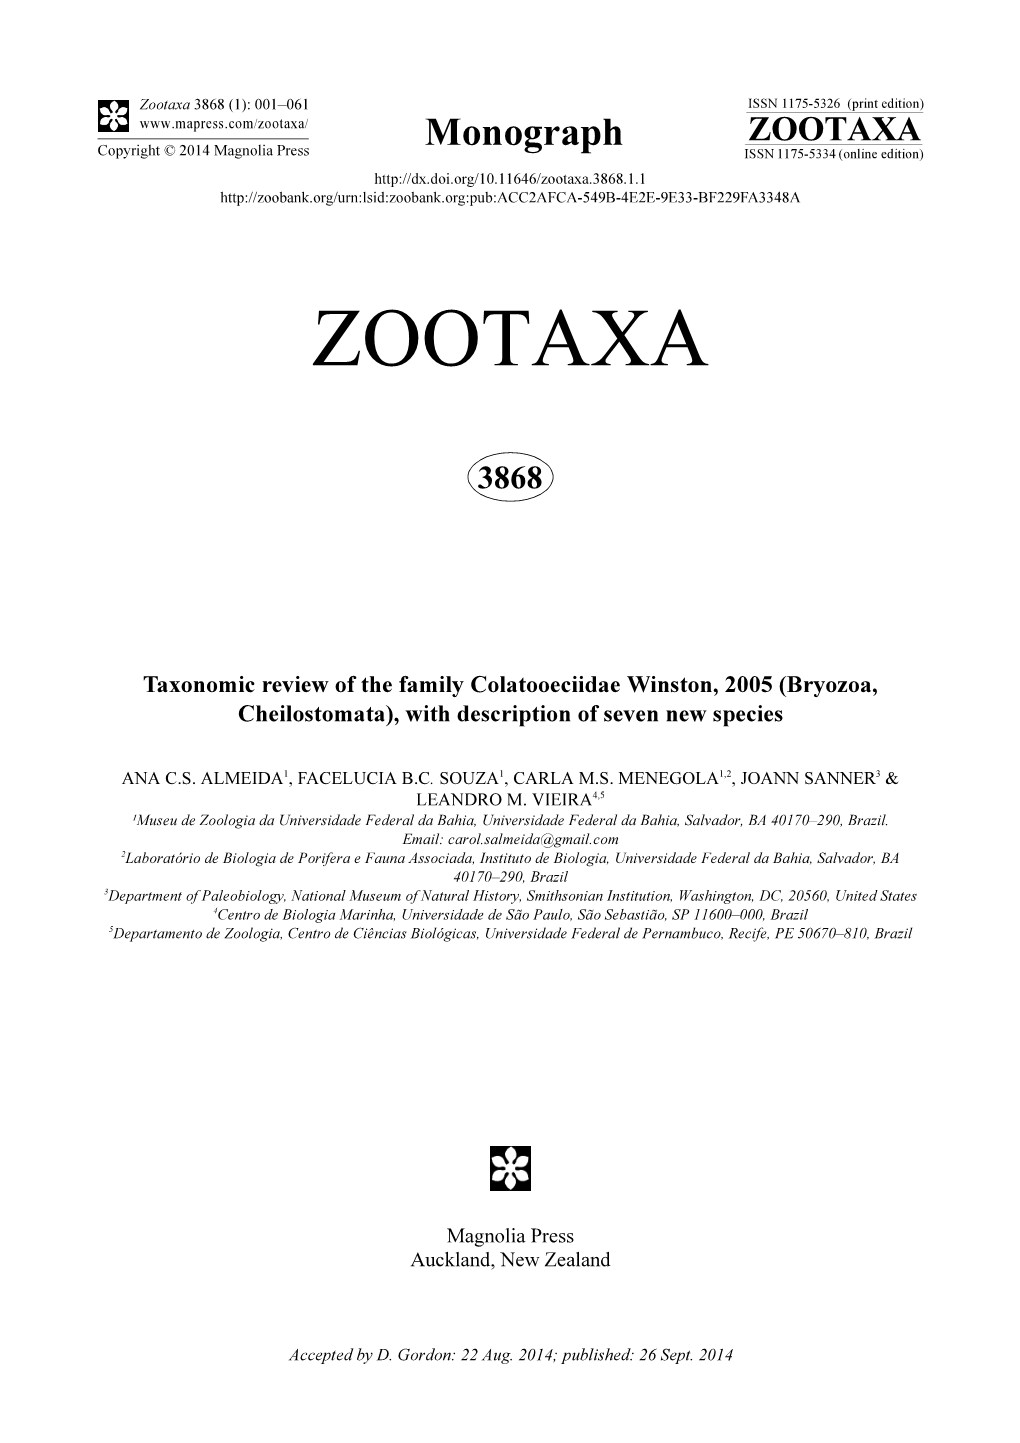 Taxonomic Review of the Family Colatooeciidae Winston, 2005 (Bryozoa, Cheilostomata), with Description of Seven New Species